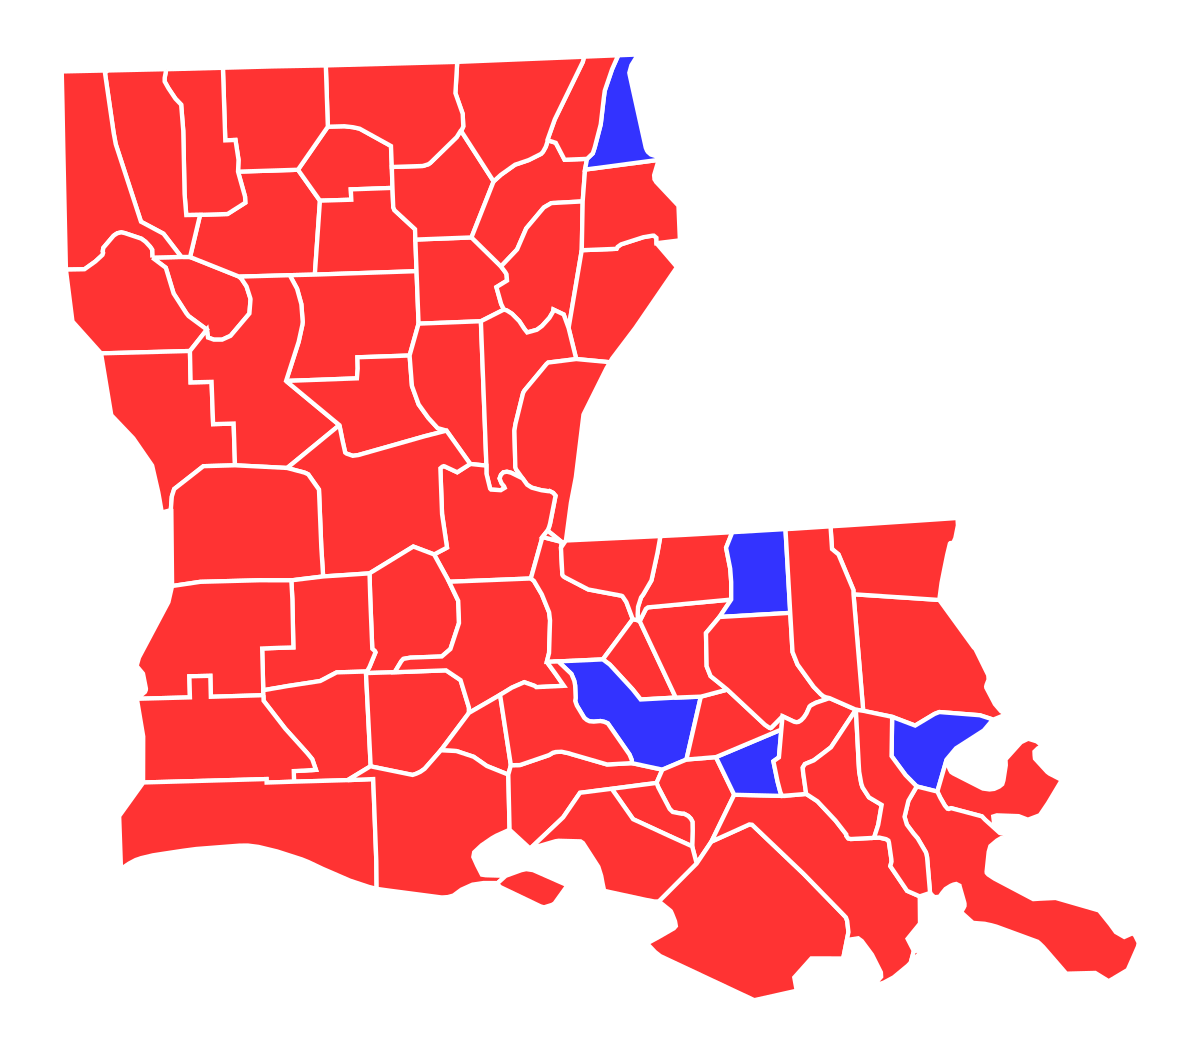 Louisiana gubernatorial wikipedia . Election clipart lieutenant governor